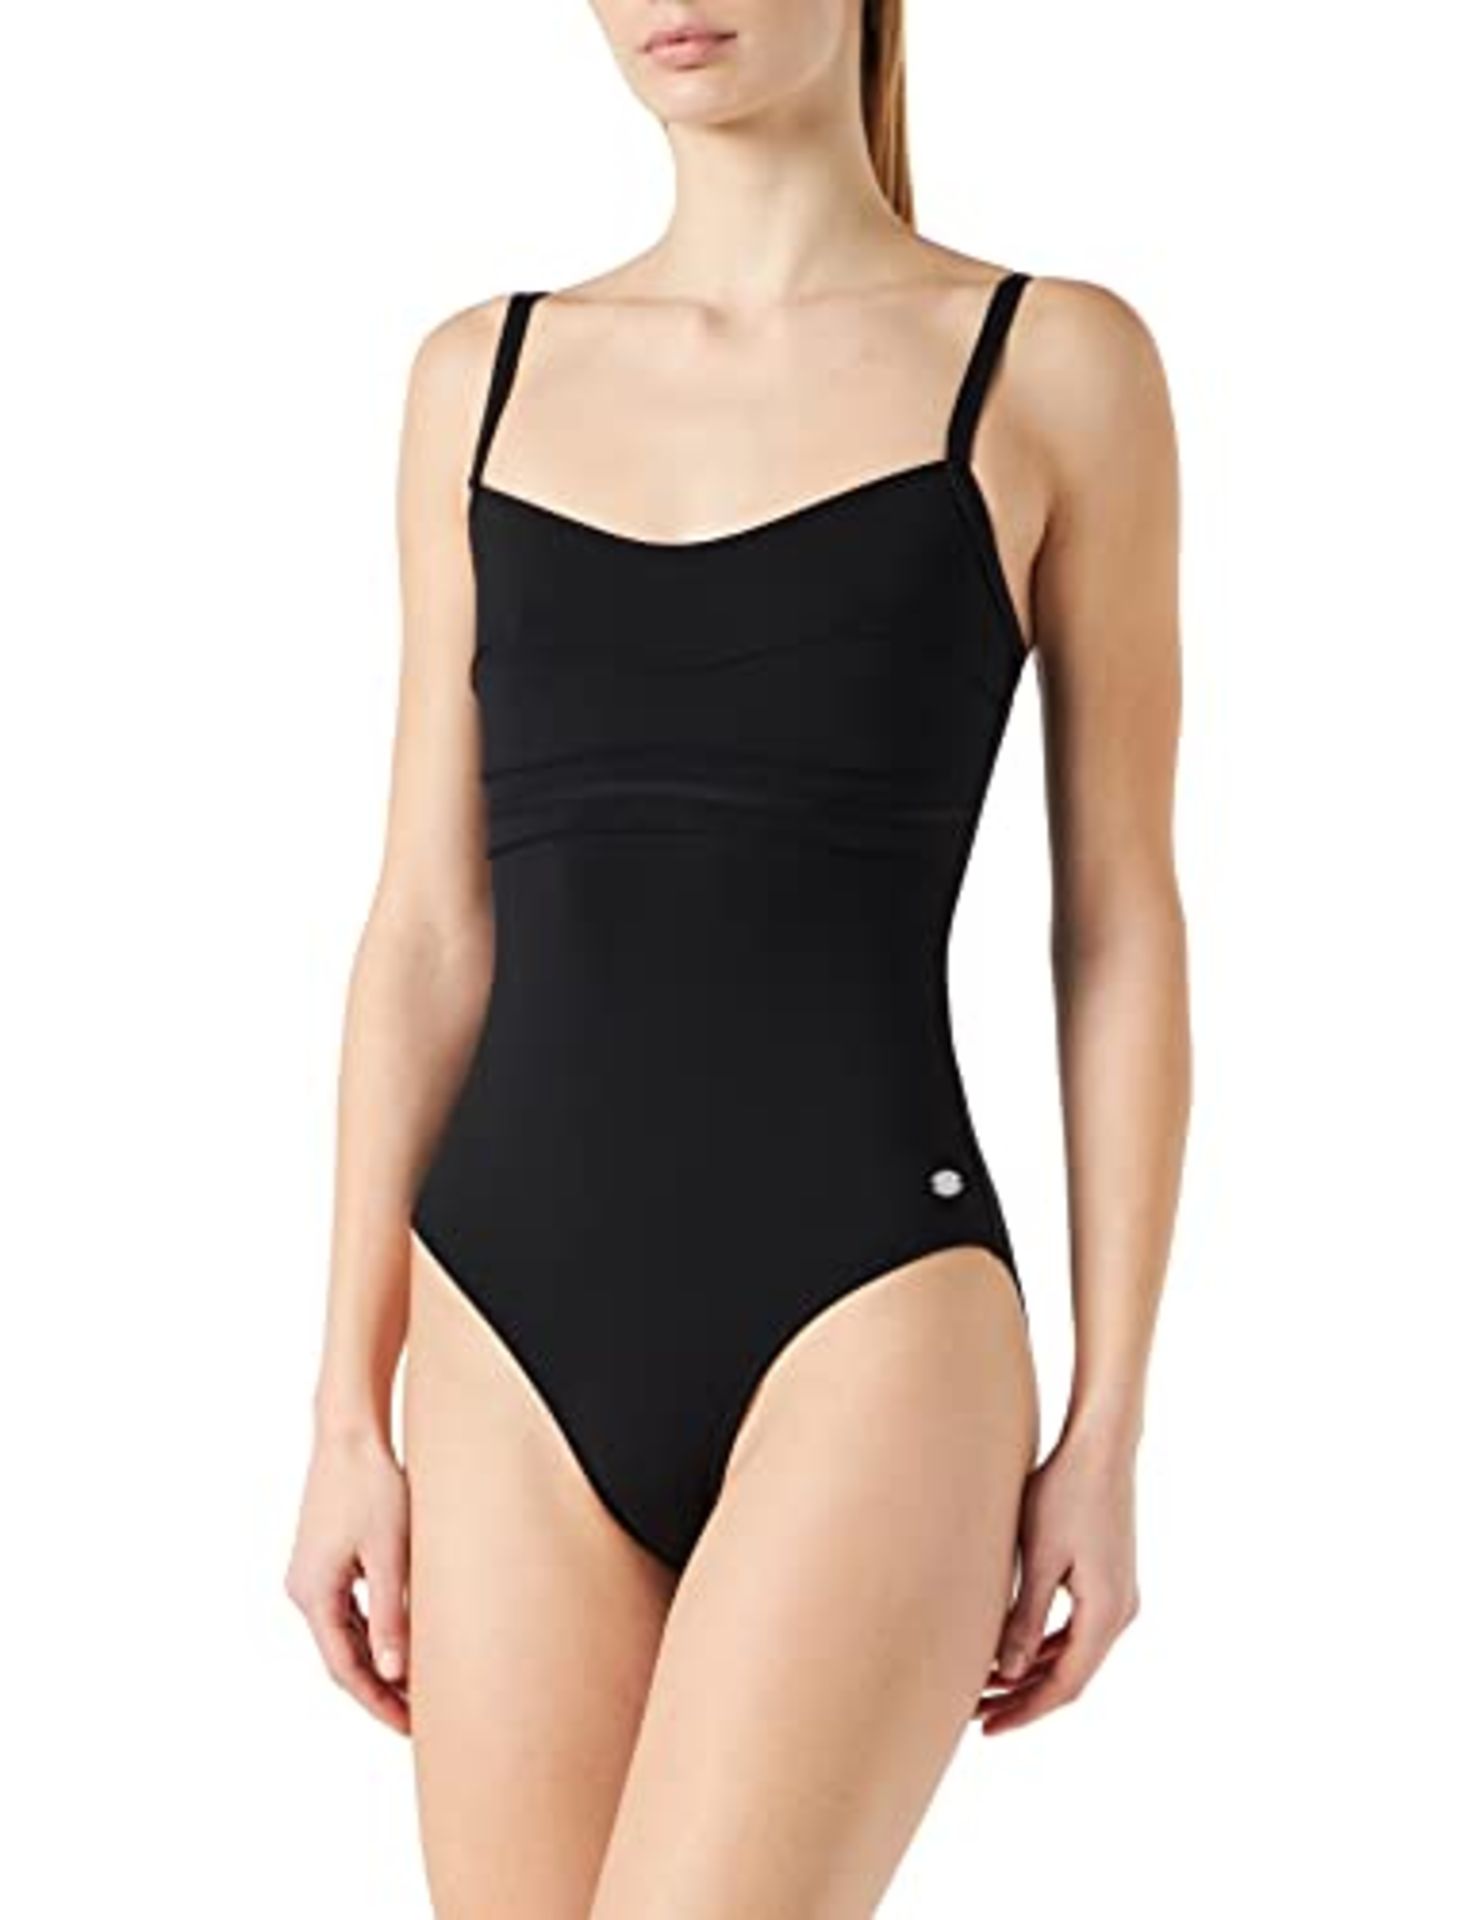 High pressure R1001 One-Piece Swimsuit, Black, Women's Size 44